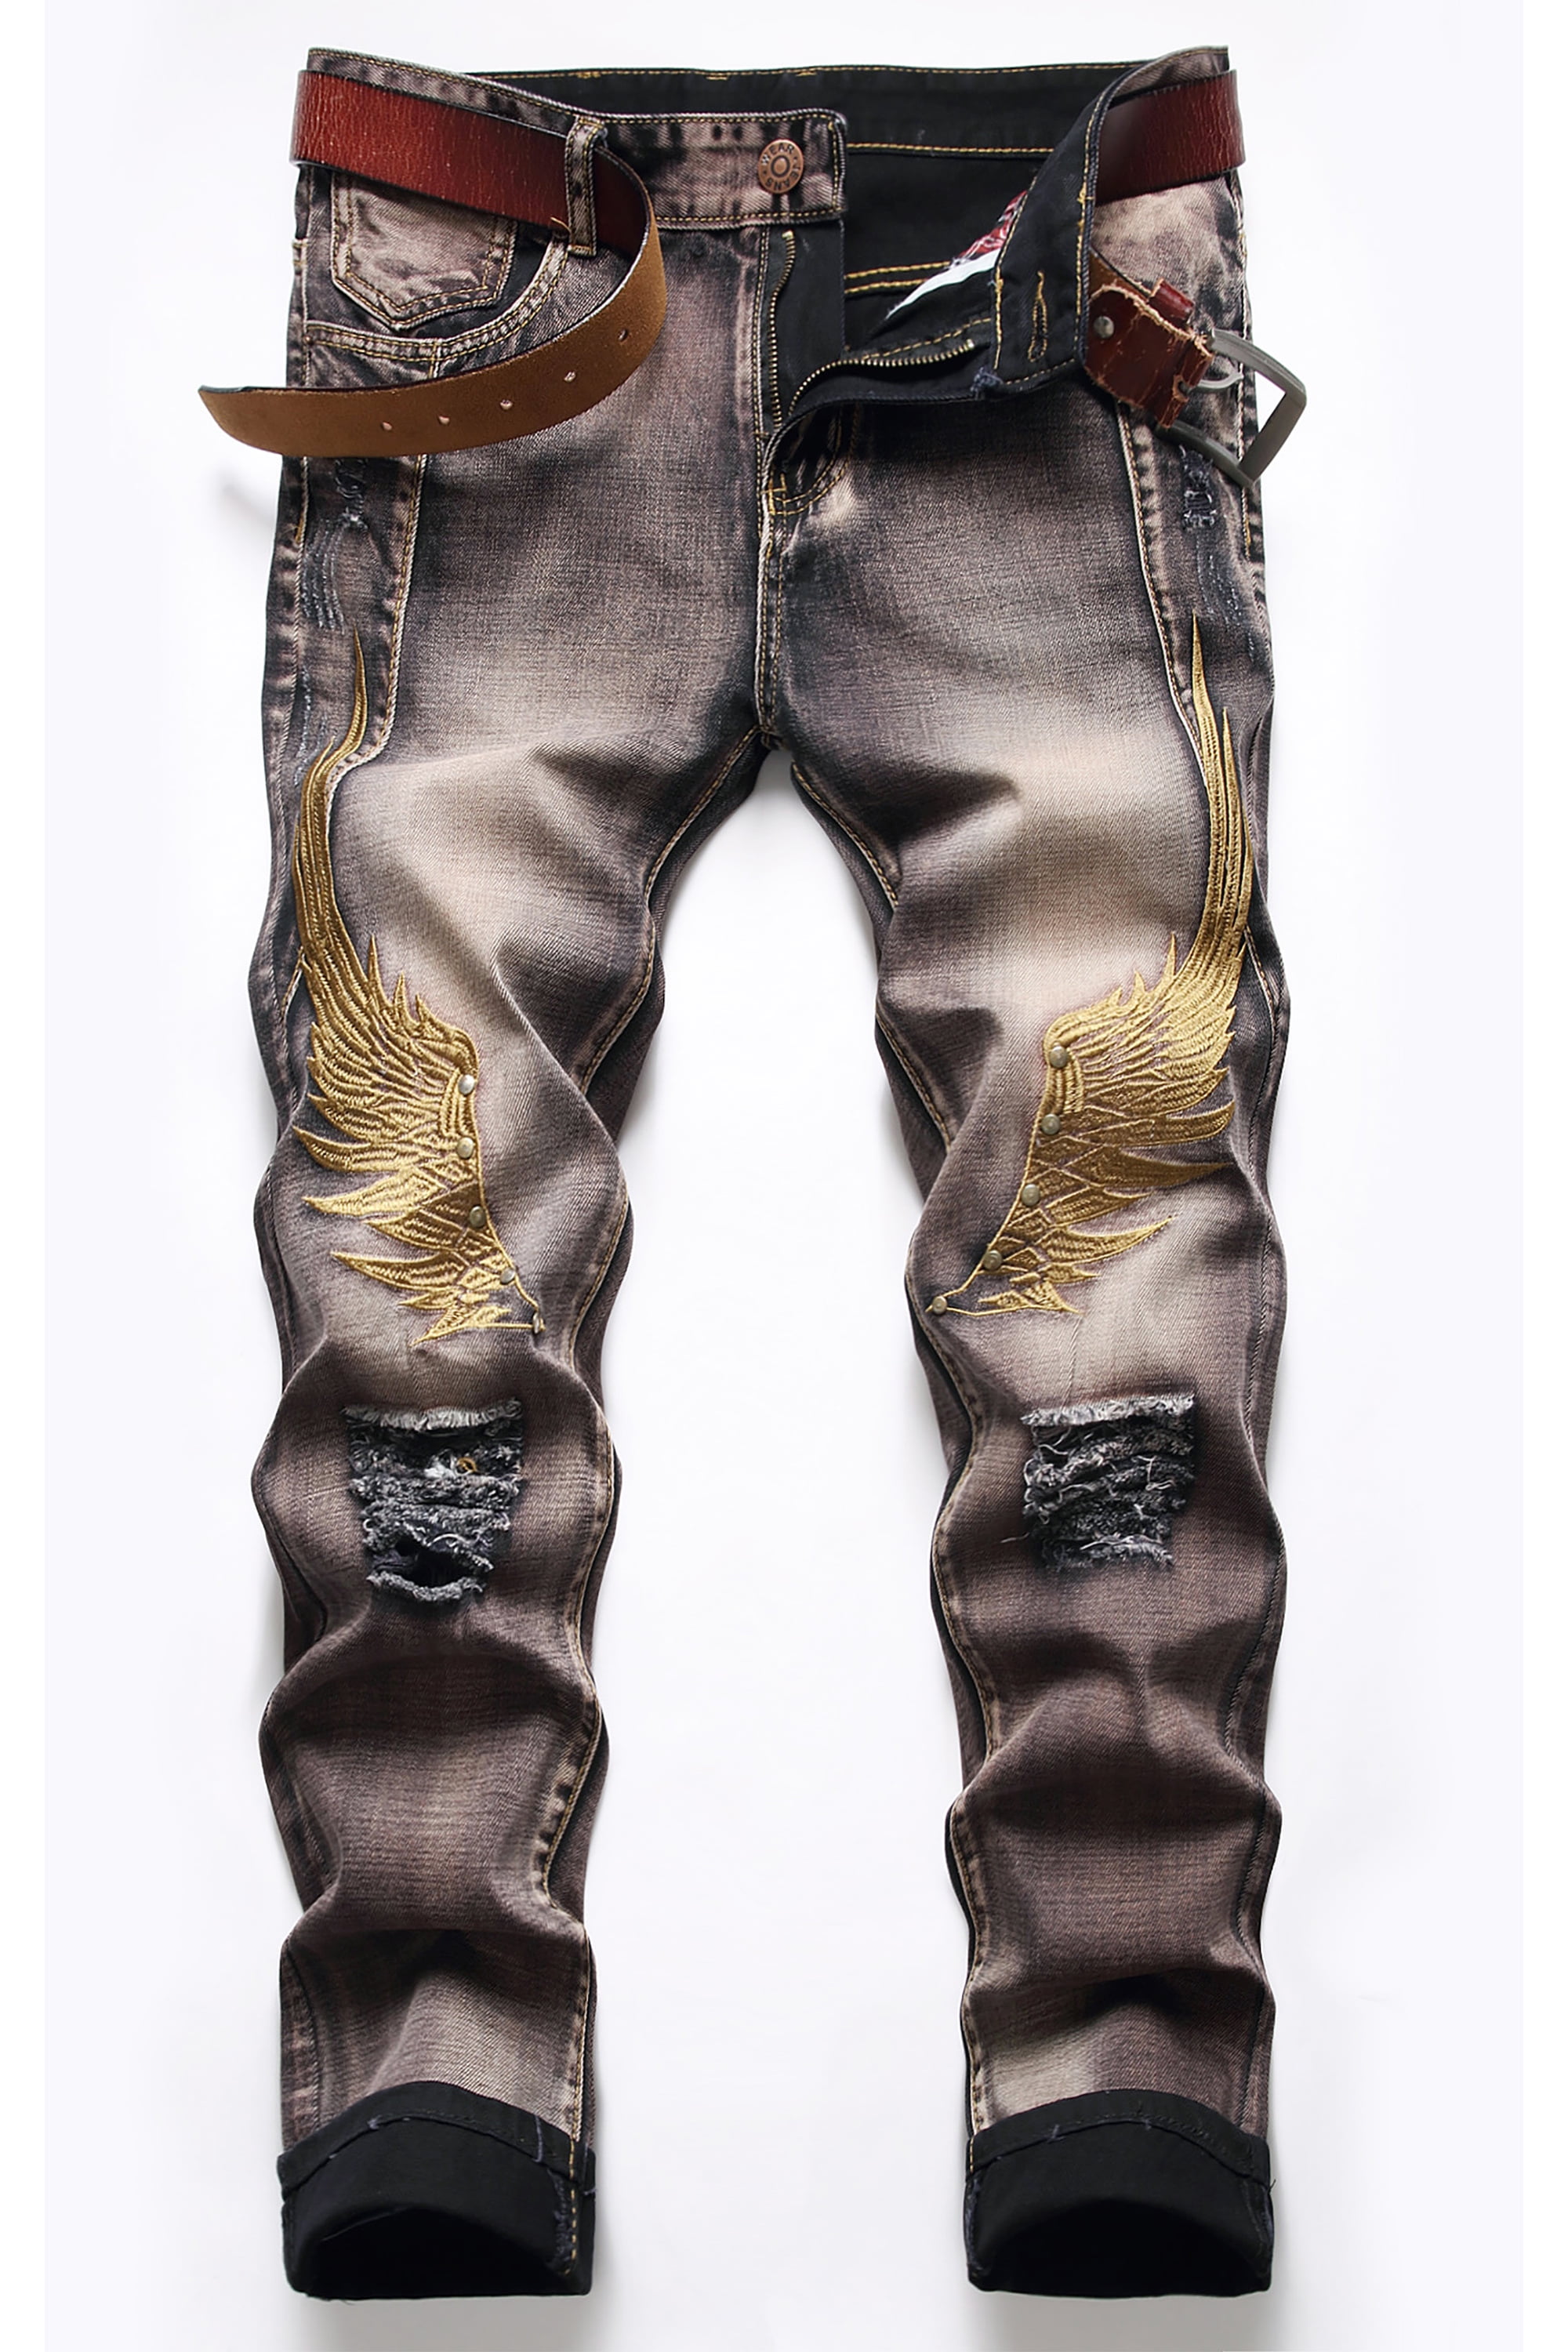 LZLER Men's Ripped Distressed Slim Fit Embroidery Denim Jeans - Walmart.com